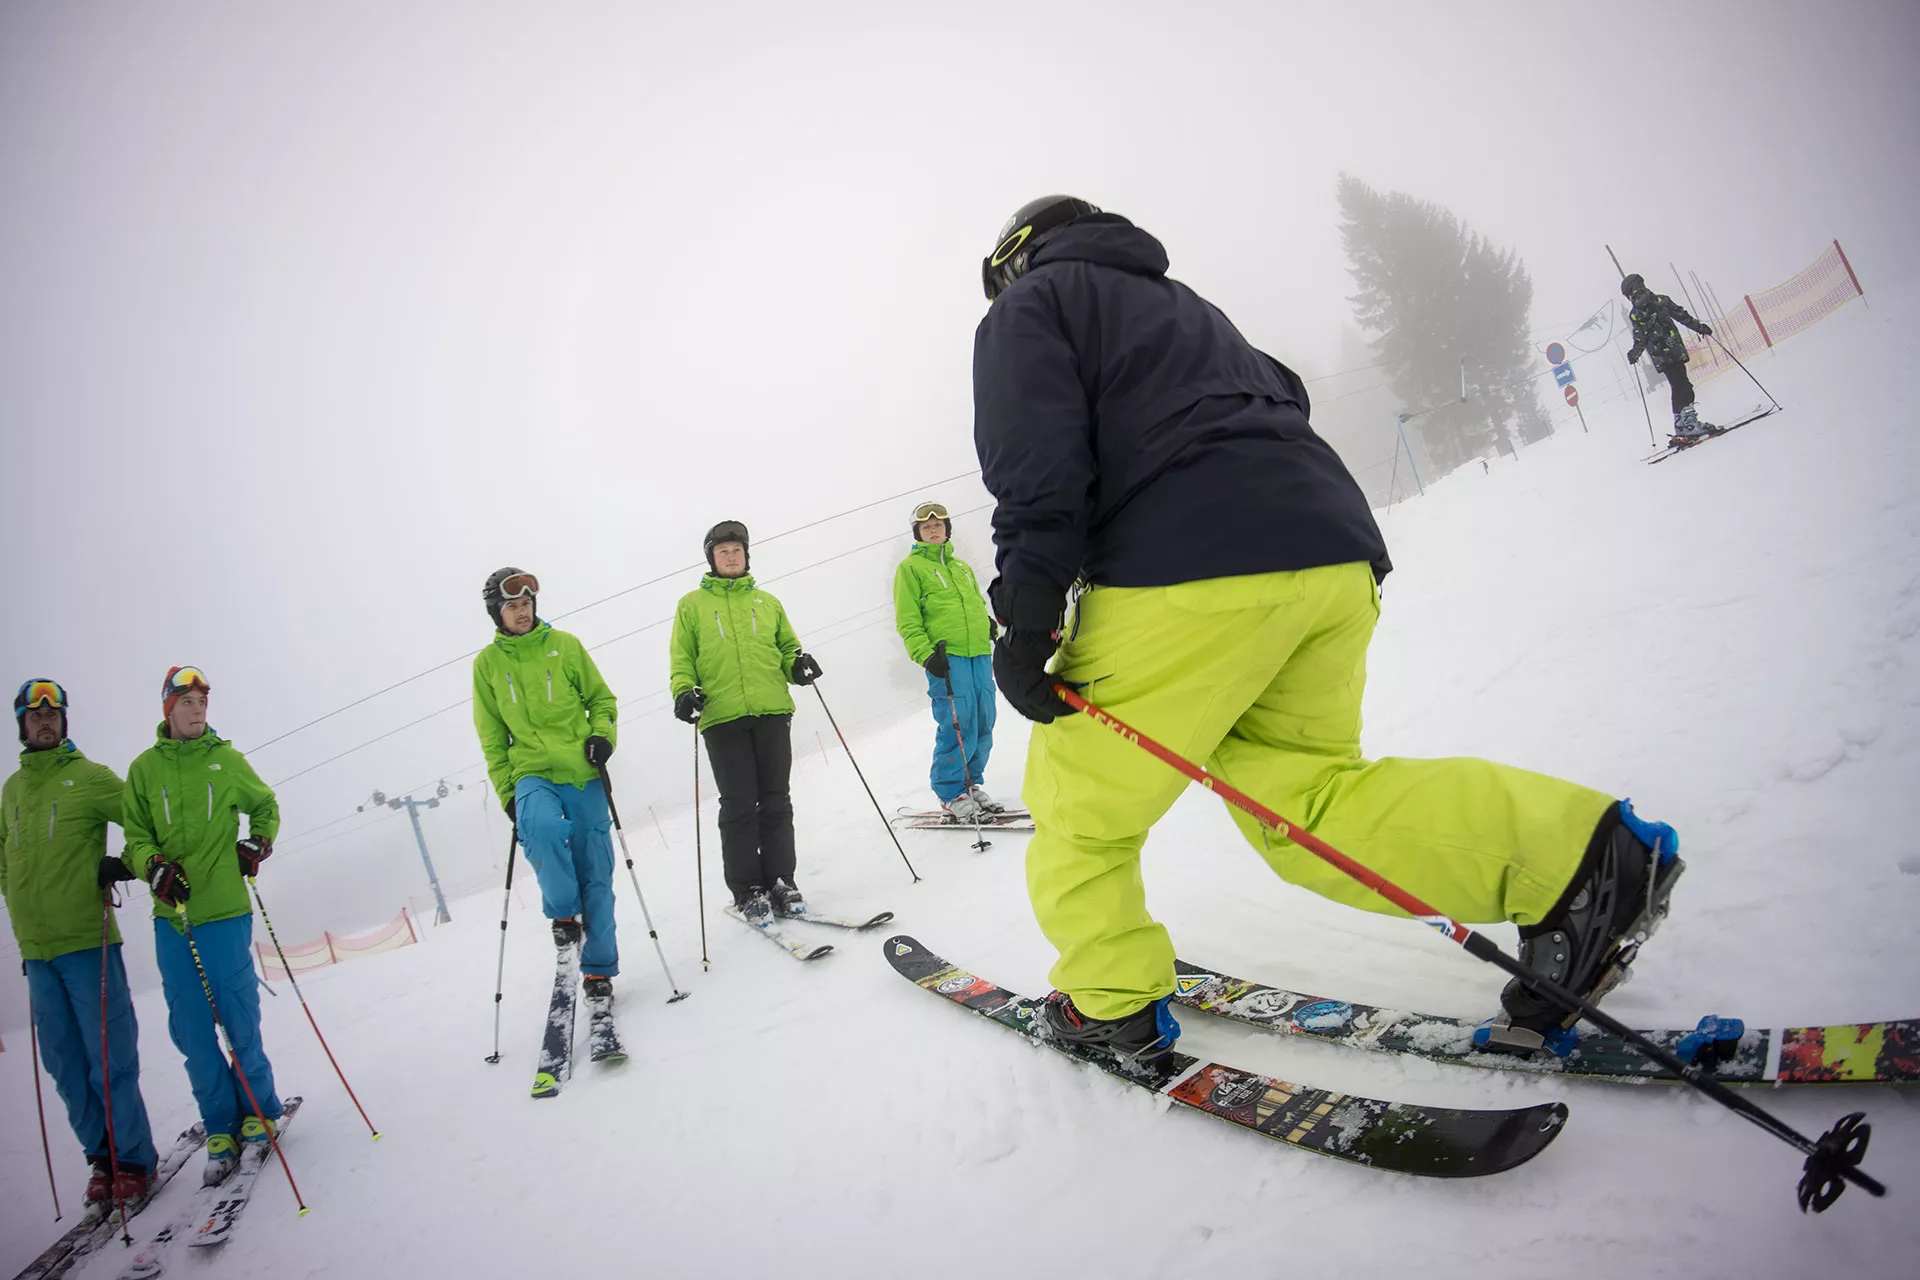 Ski & Snowboard School Jasna in Slovakia, Europe | Snowboarding,Skiing - Rated 0.9